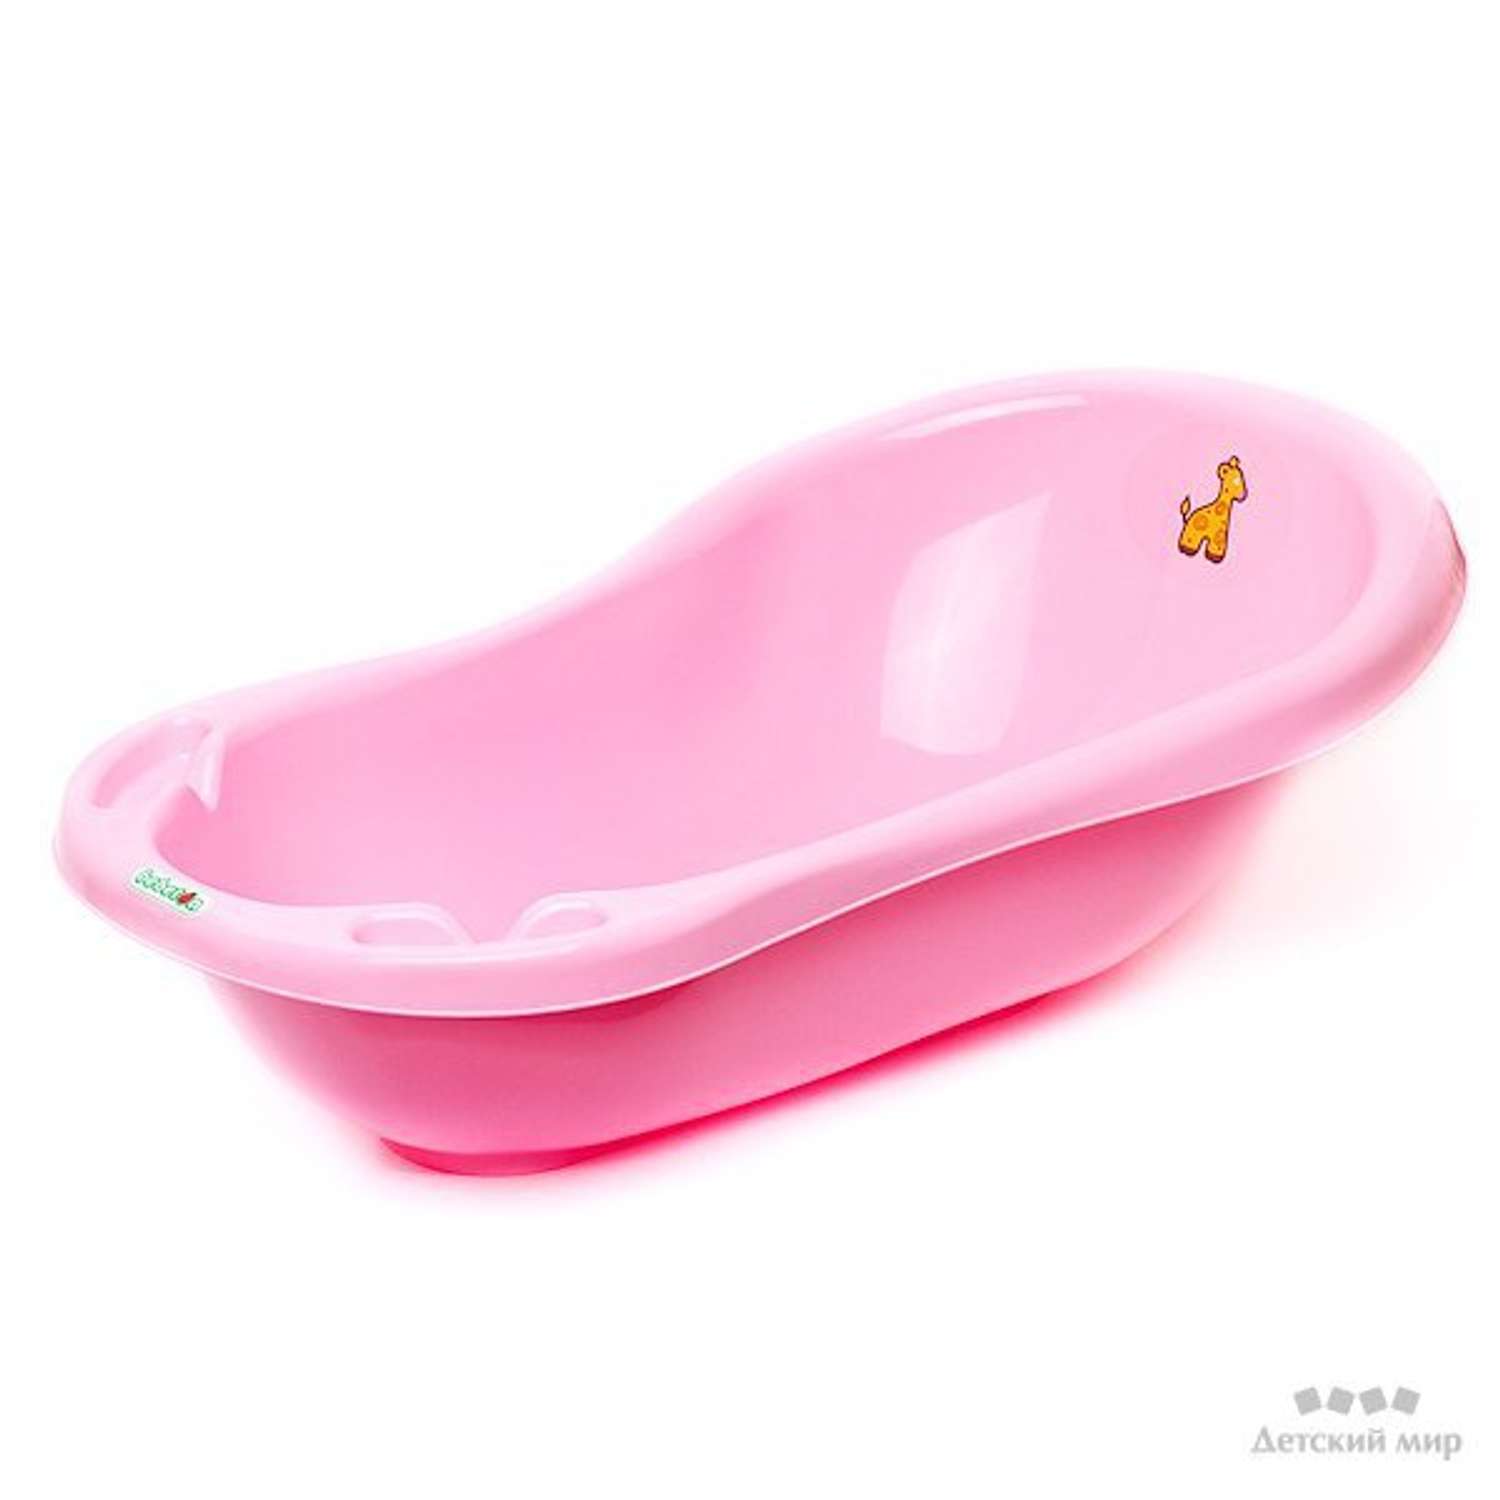 Ванночек форум. Ванночка бебетон. Детская ванна Babyton 100. Ванночка Babyton 46л. М3222 ванна детская "Карапуз"(розовый).